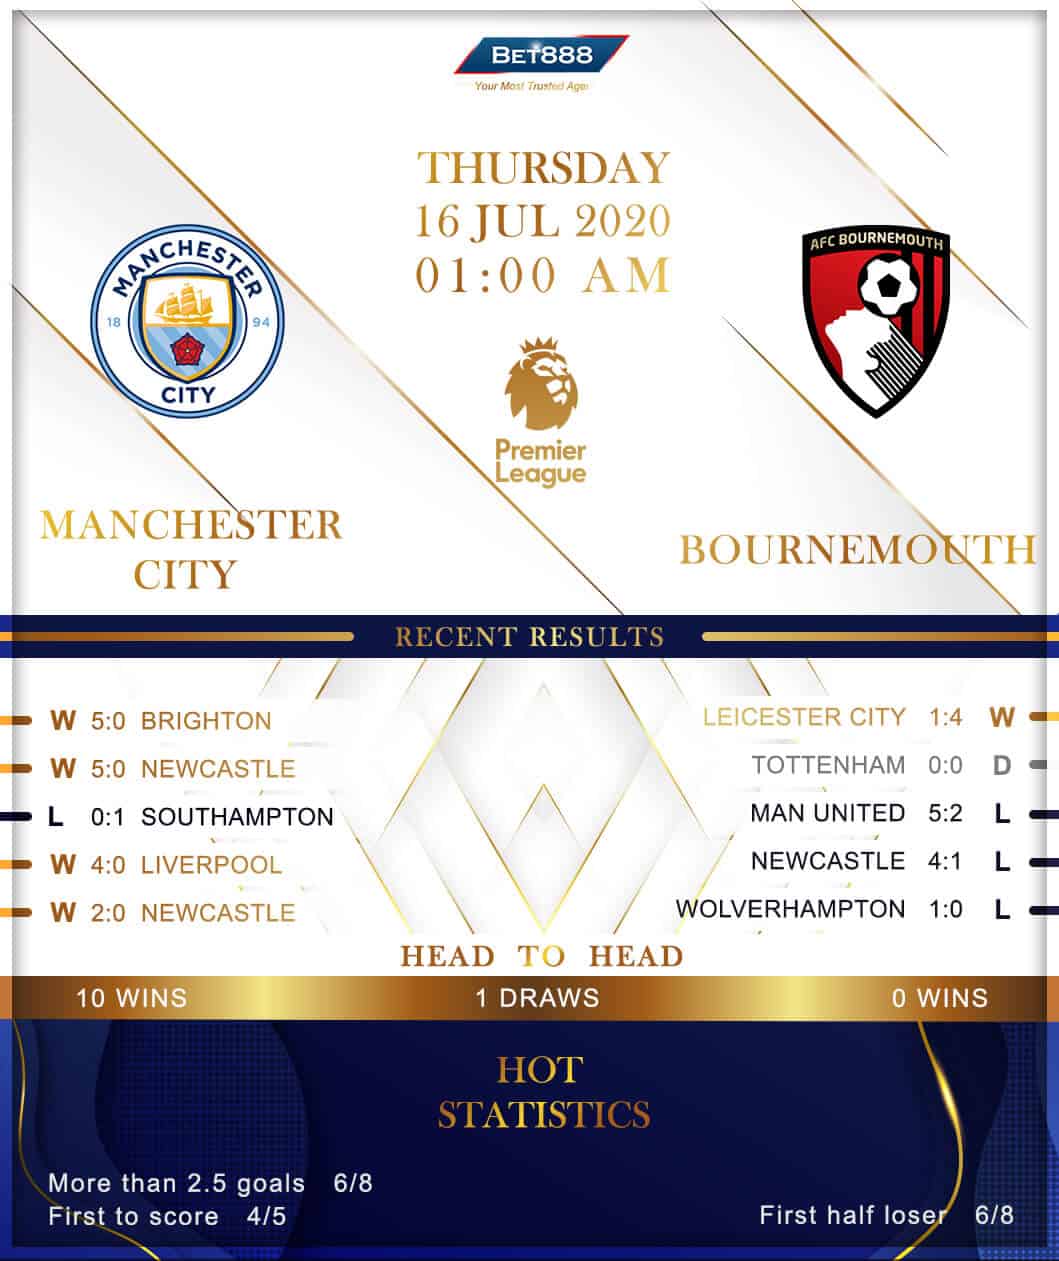 Manchester City vs Bournemouth 16/07/20